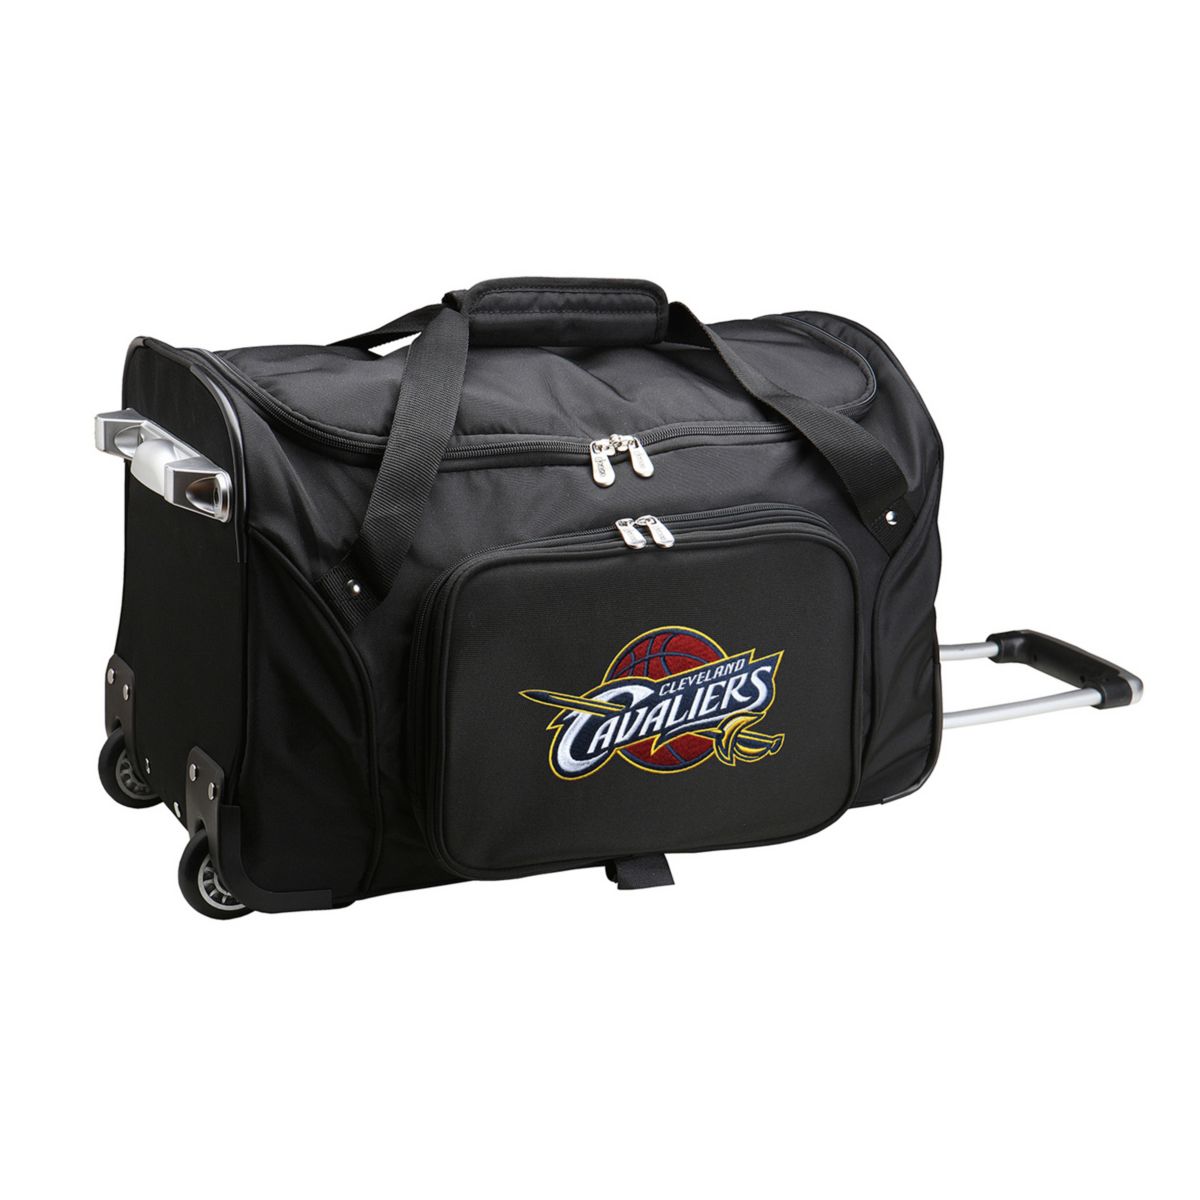 Спортивная сумка Denco Cleveland Cavaliers на колесиках 22 дюйма Denco